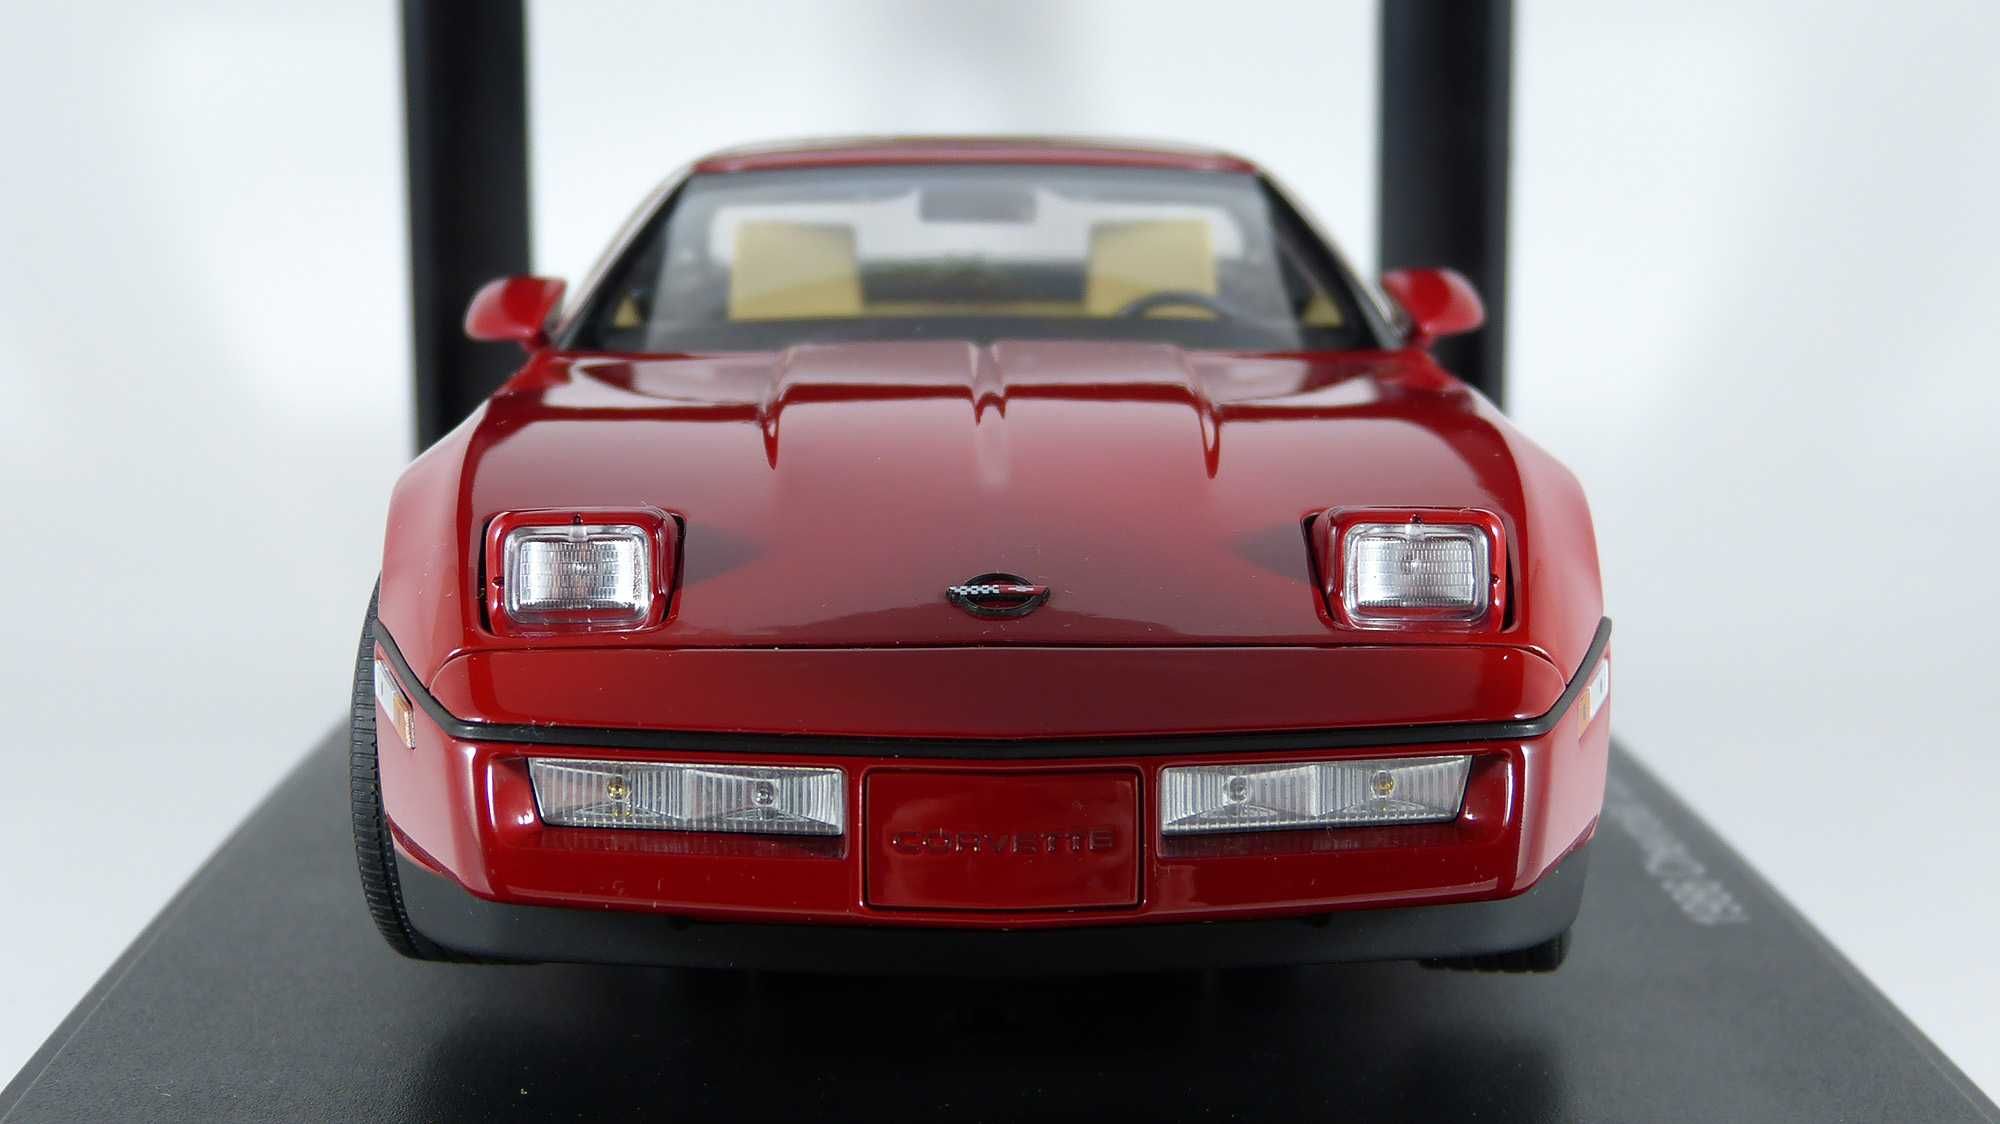 Model 1:18 AUTOart Chevrolet Corvette C4 1986 red (71241)